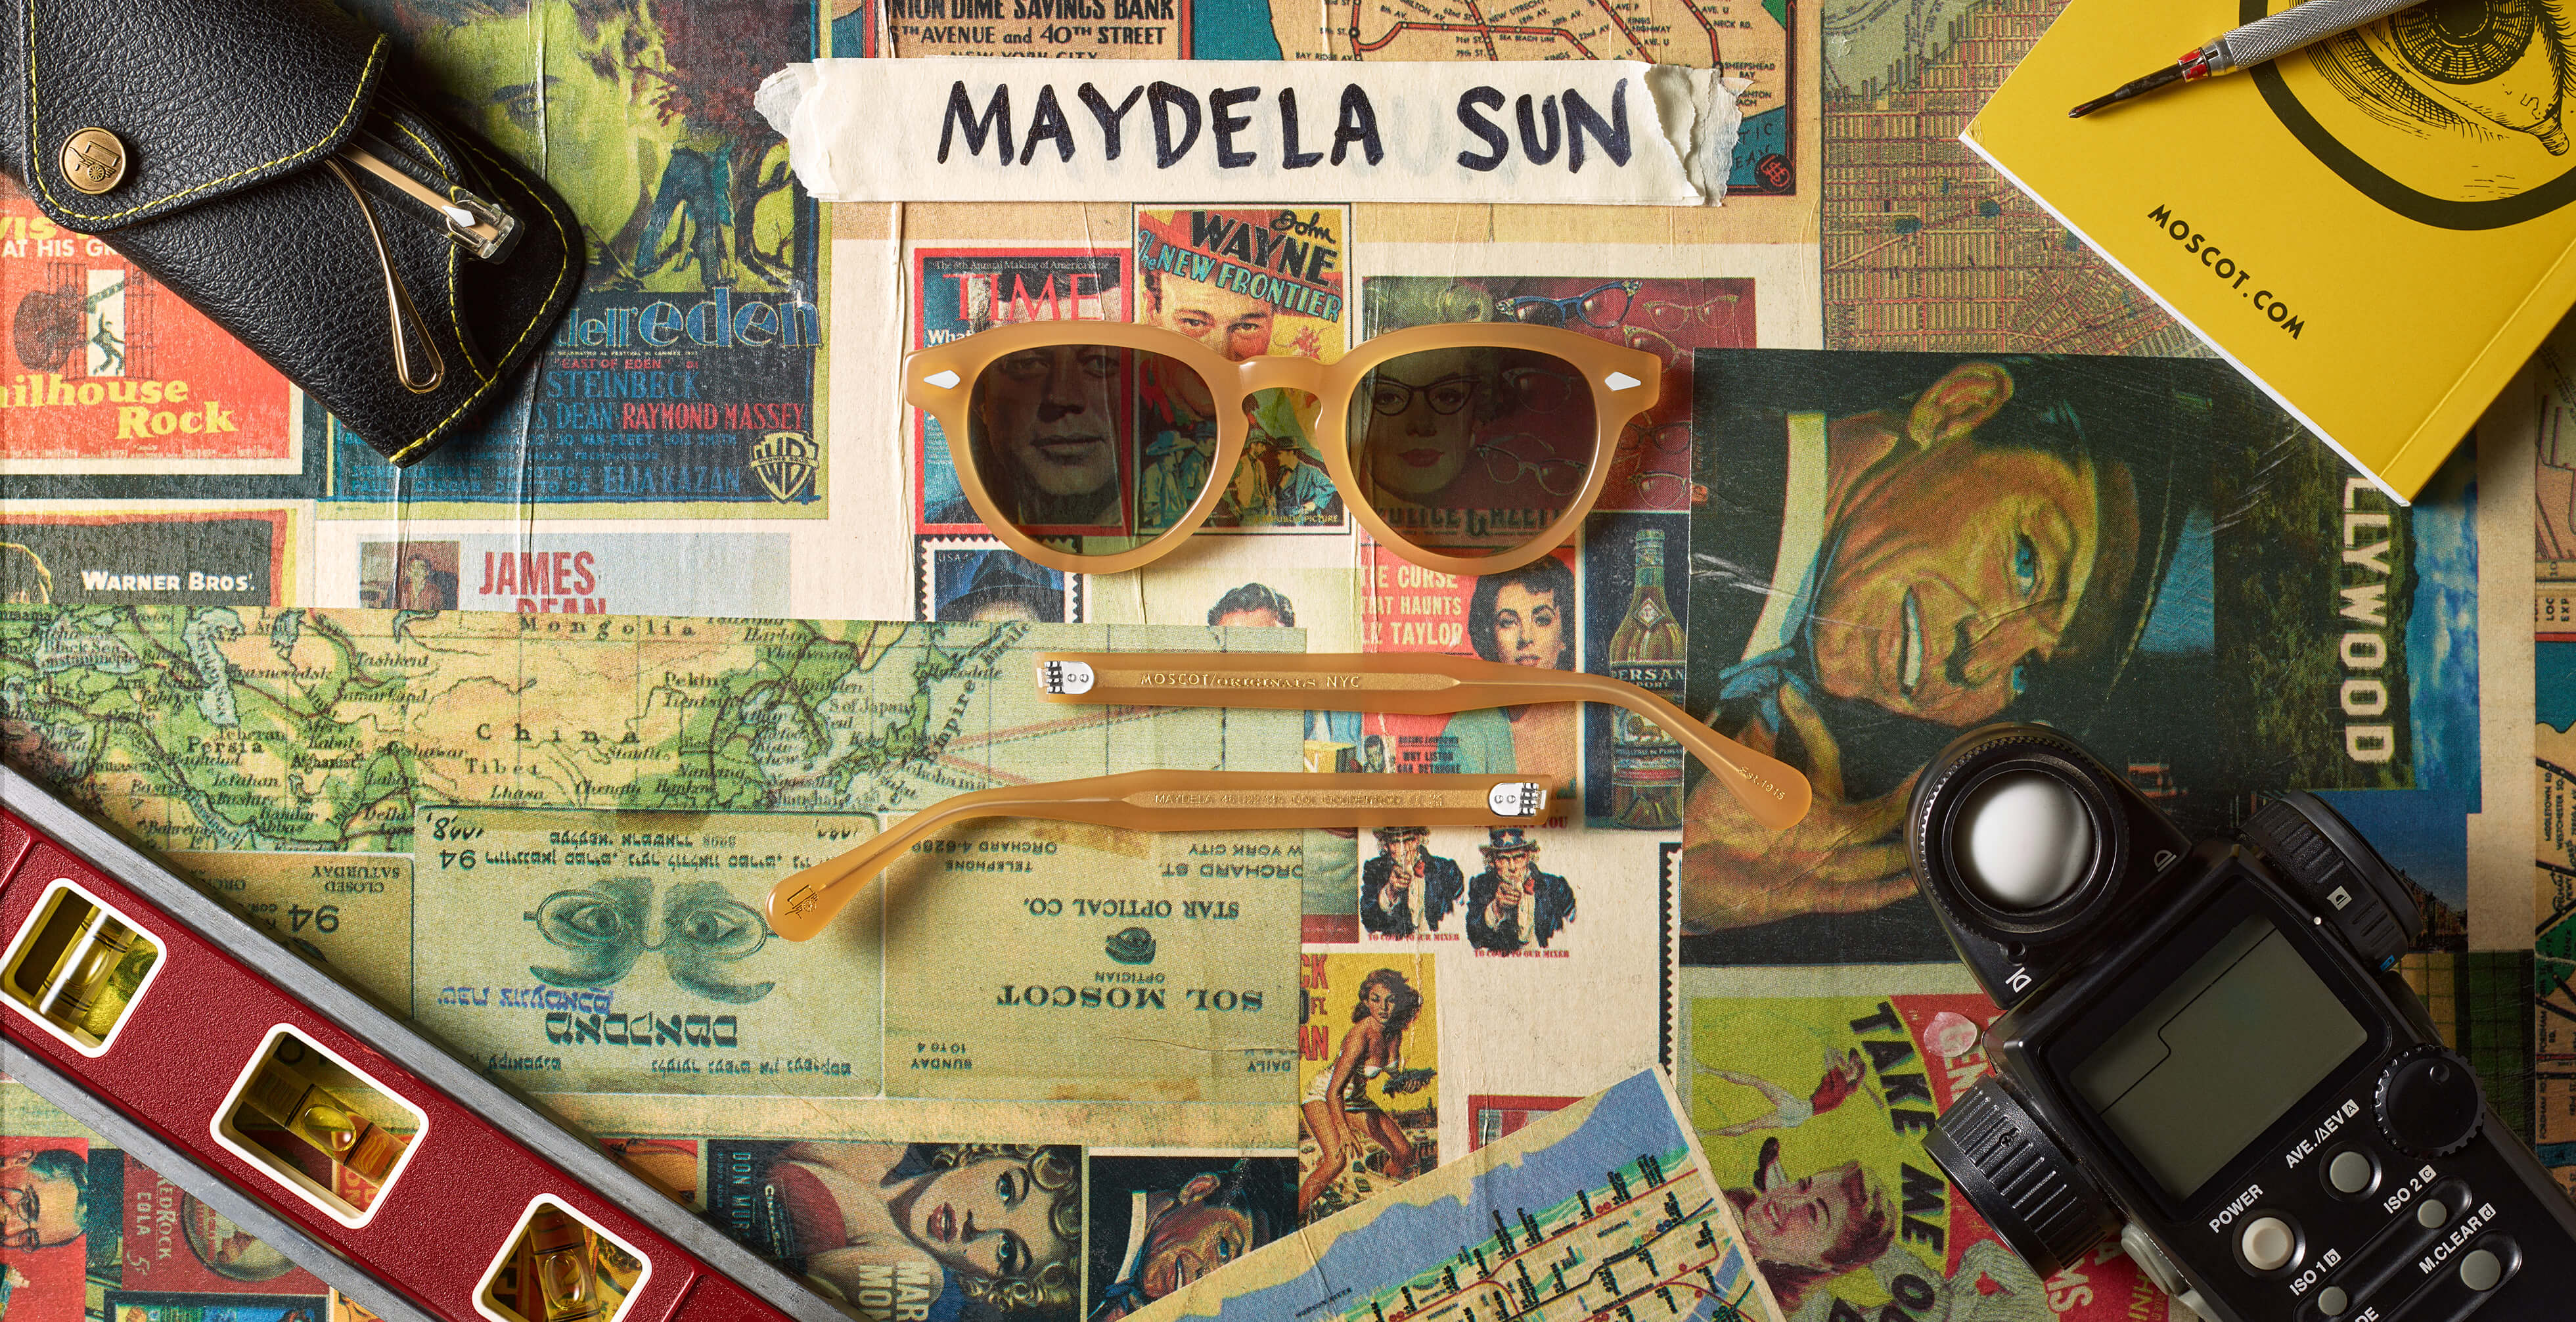 The MAYDELA SUN